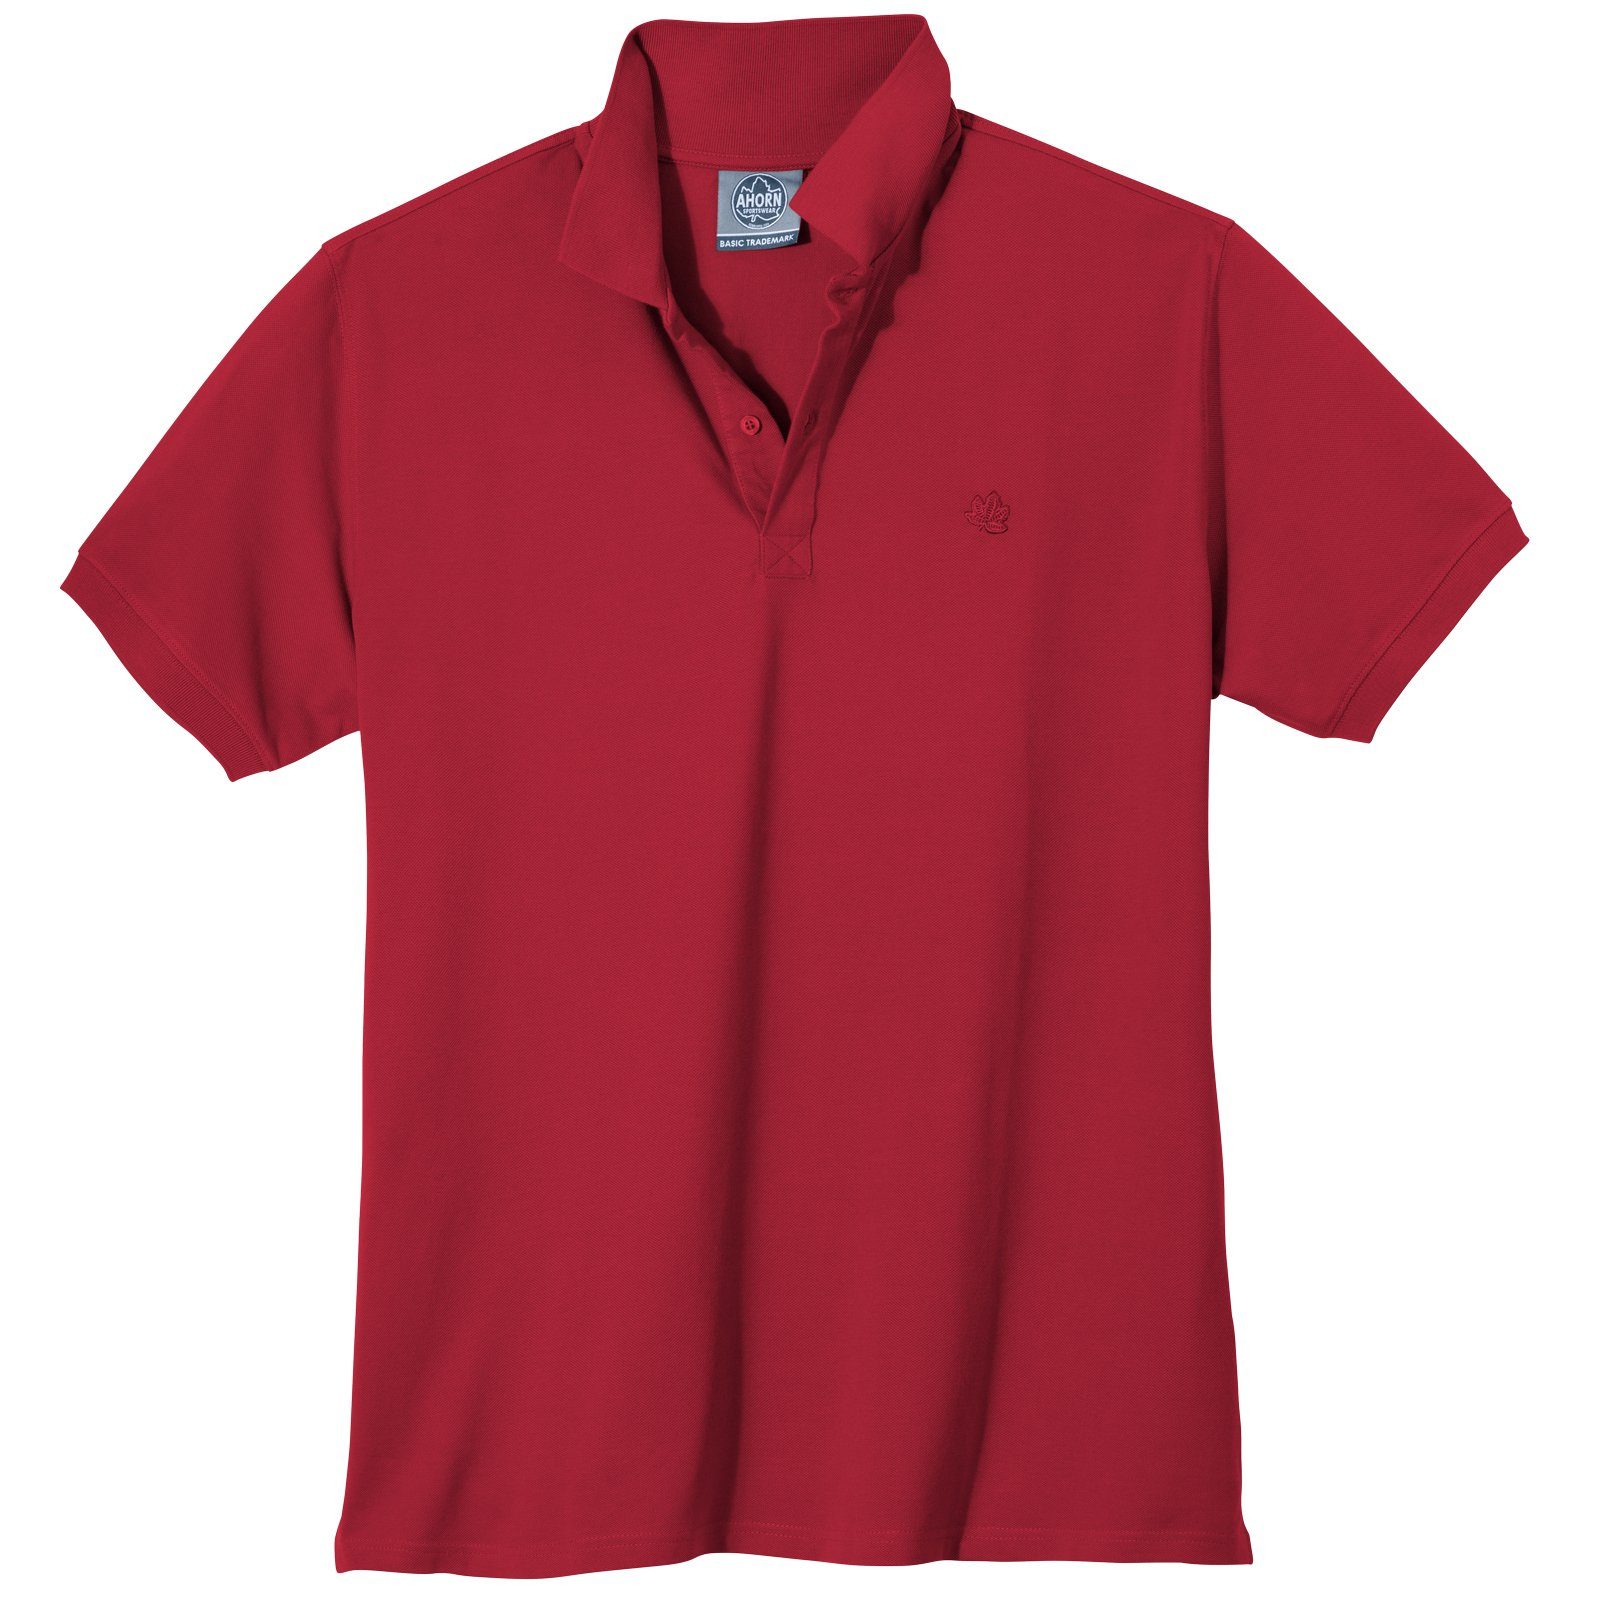 AHORN SPORTSWEAR Poloshirt Herren Übergrößen Poloshirt Ahorn Sportswear rot | Poloshirts